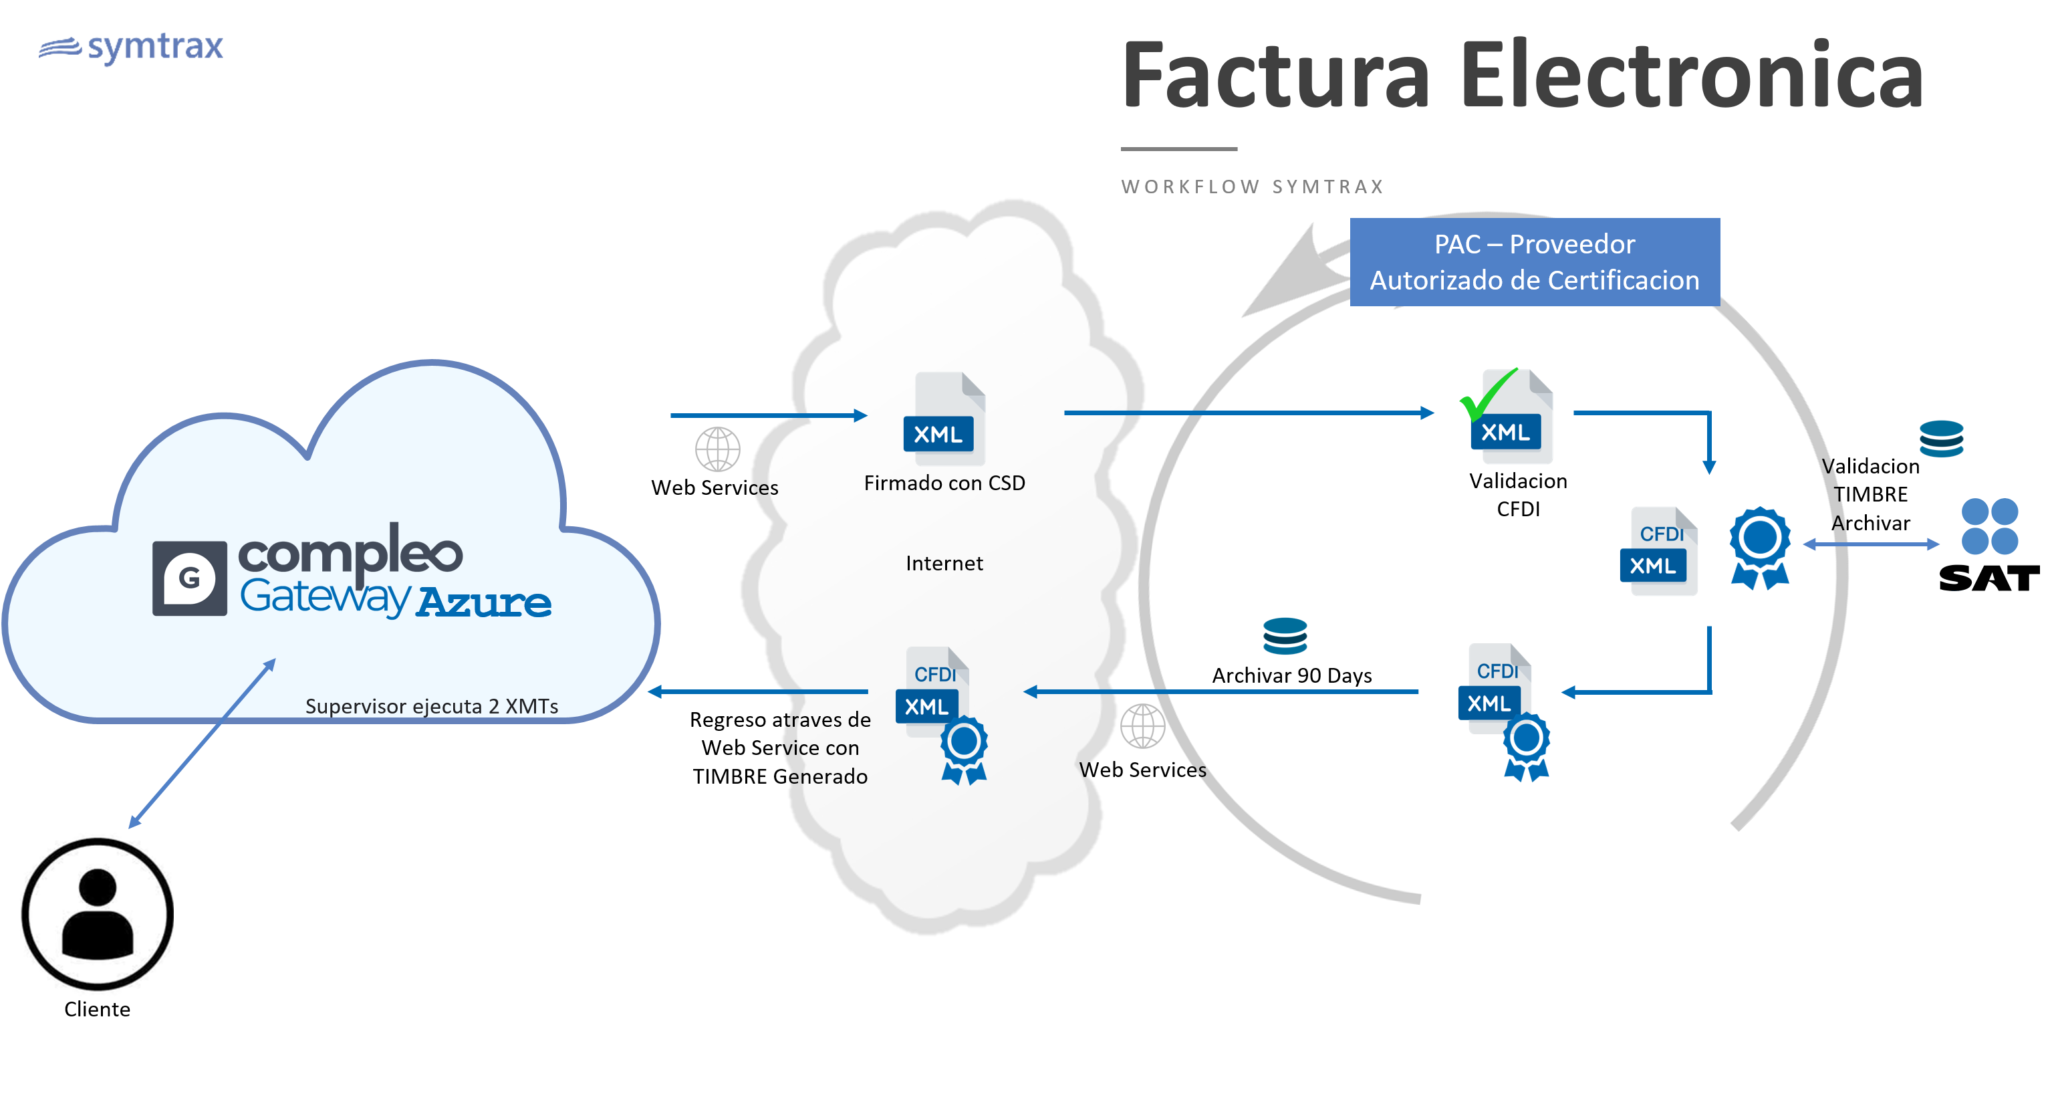 Factura Electronica schema